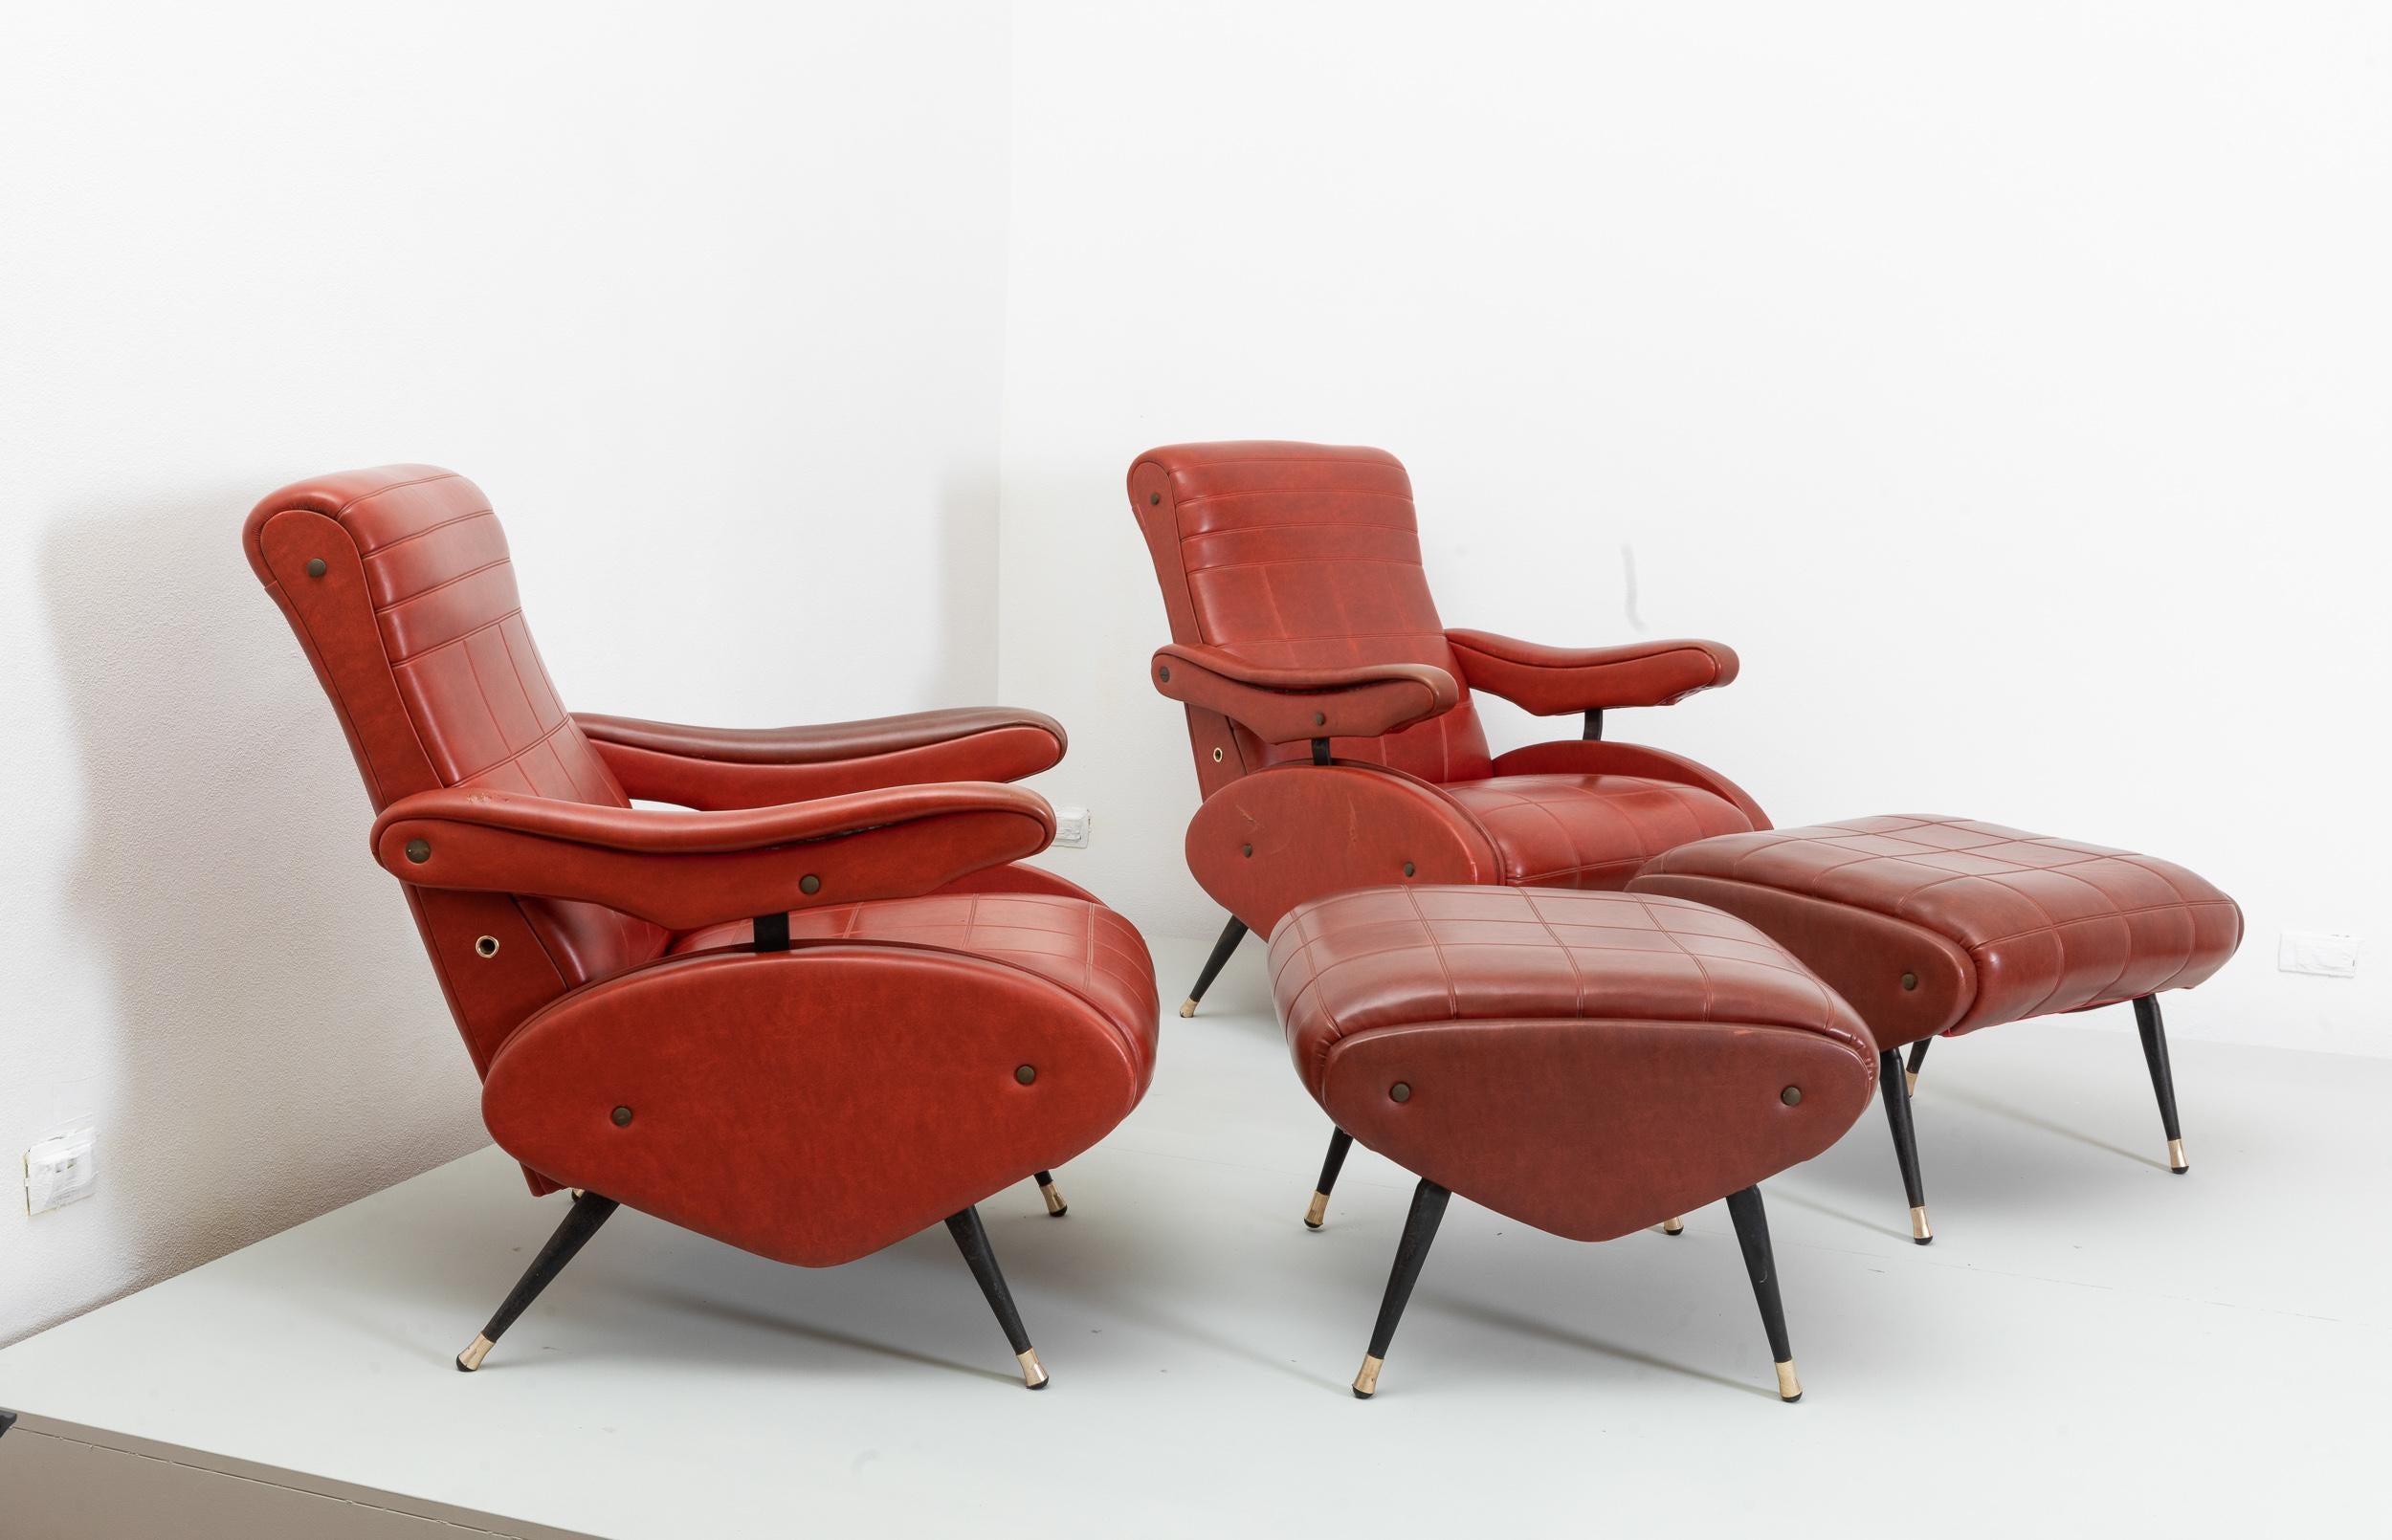 Nello Pini Prod. Novarredo c. 1950-1960 Two reclining armchairs and two pouffs 1